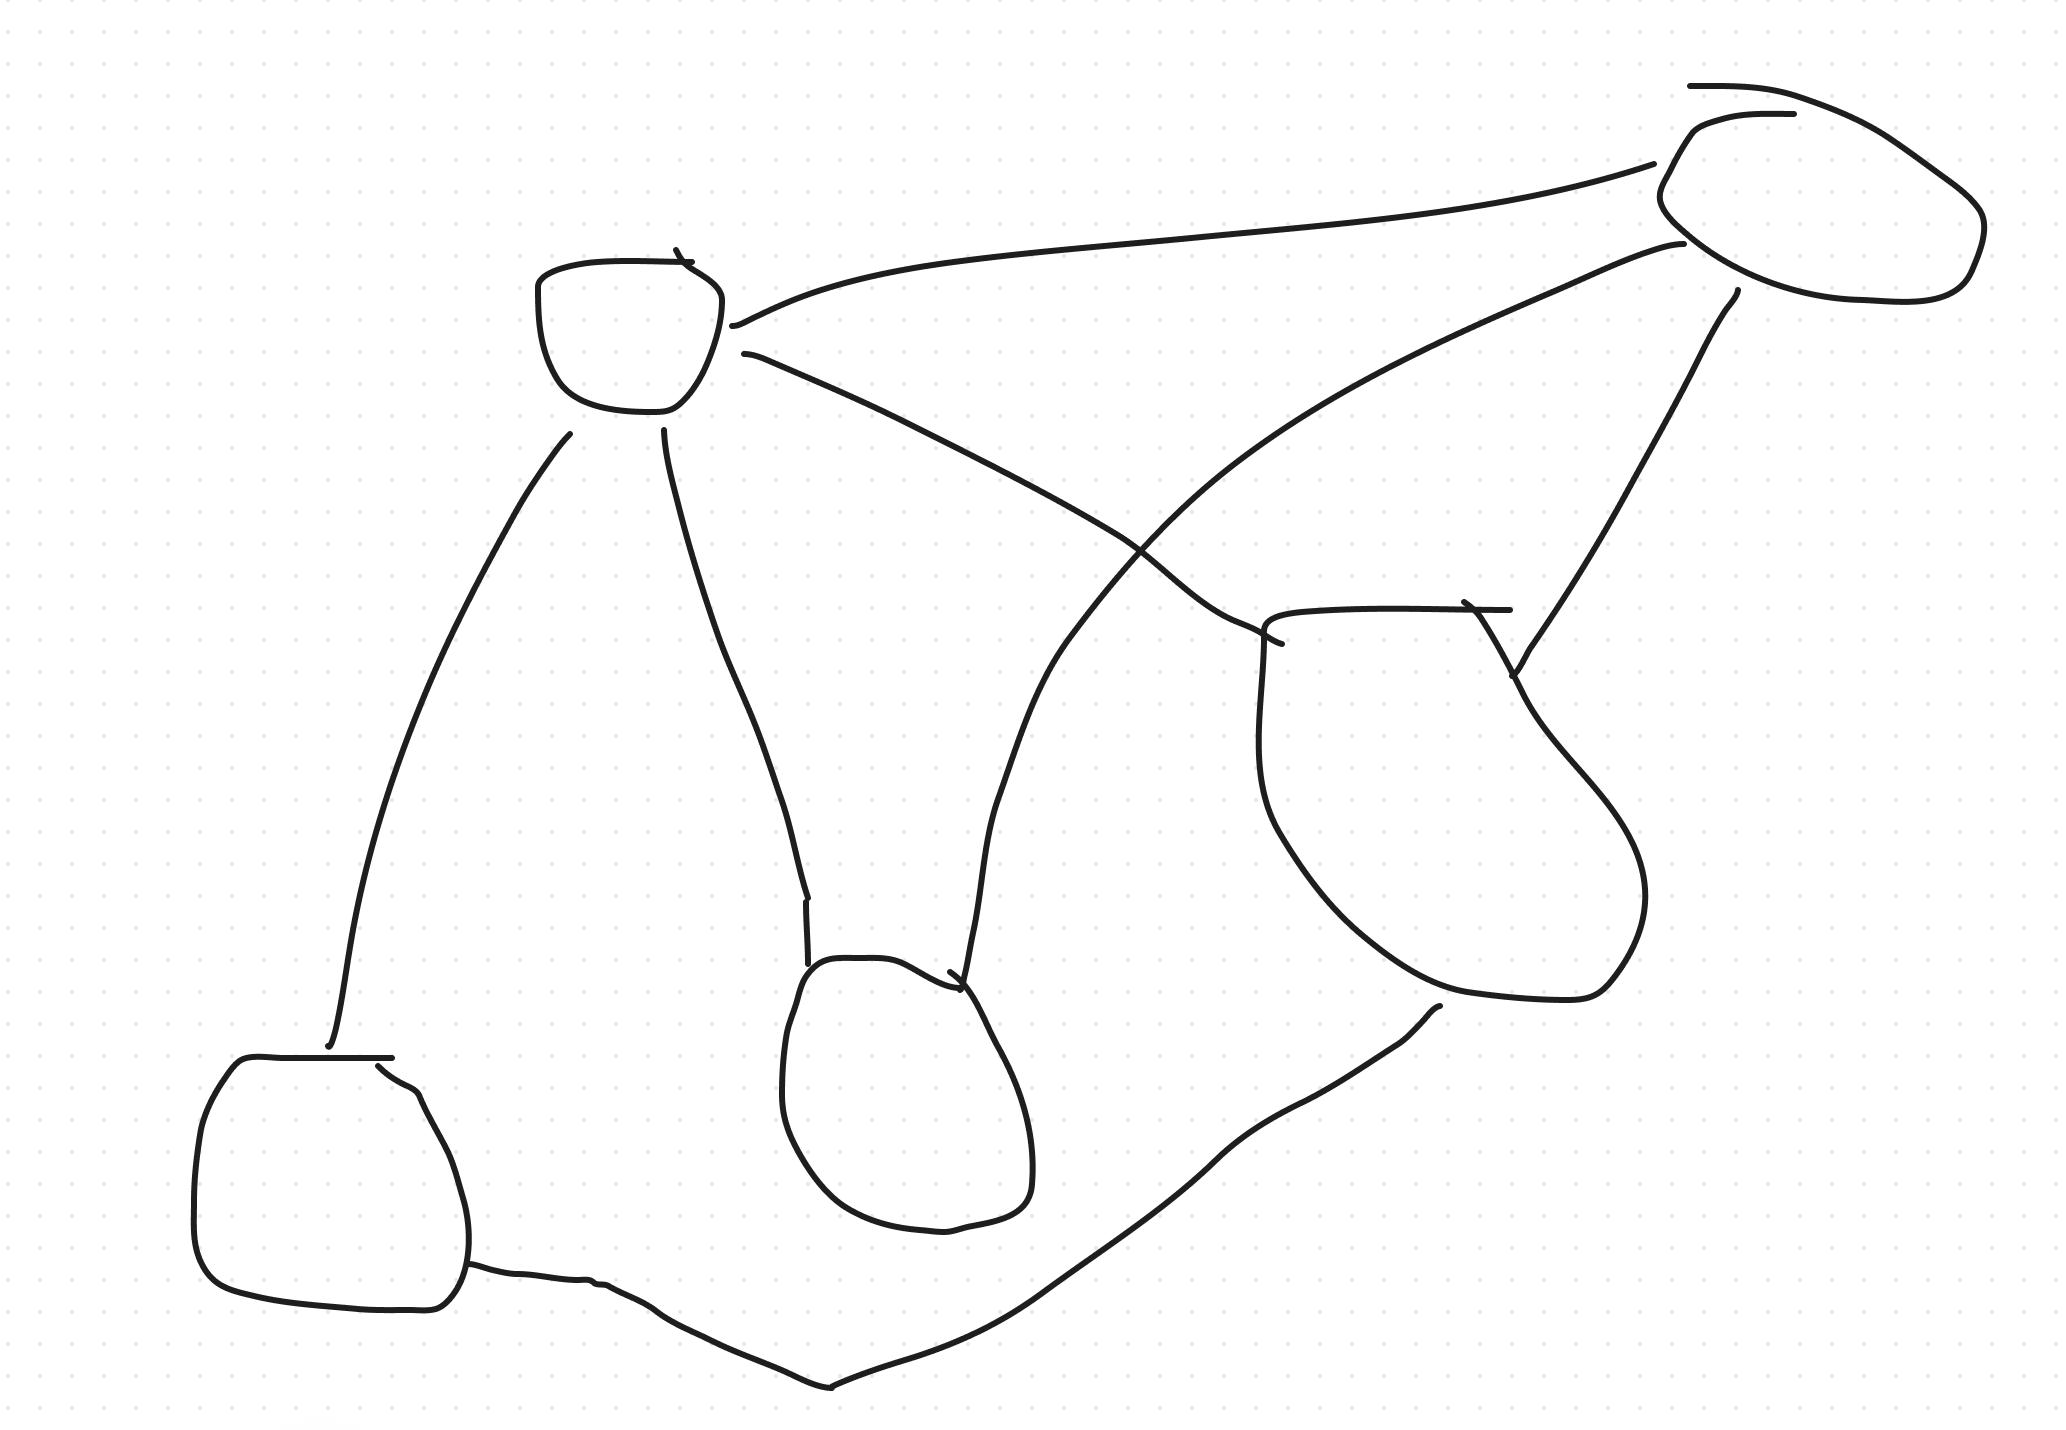 week-14-problem-sheet-simple-graph